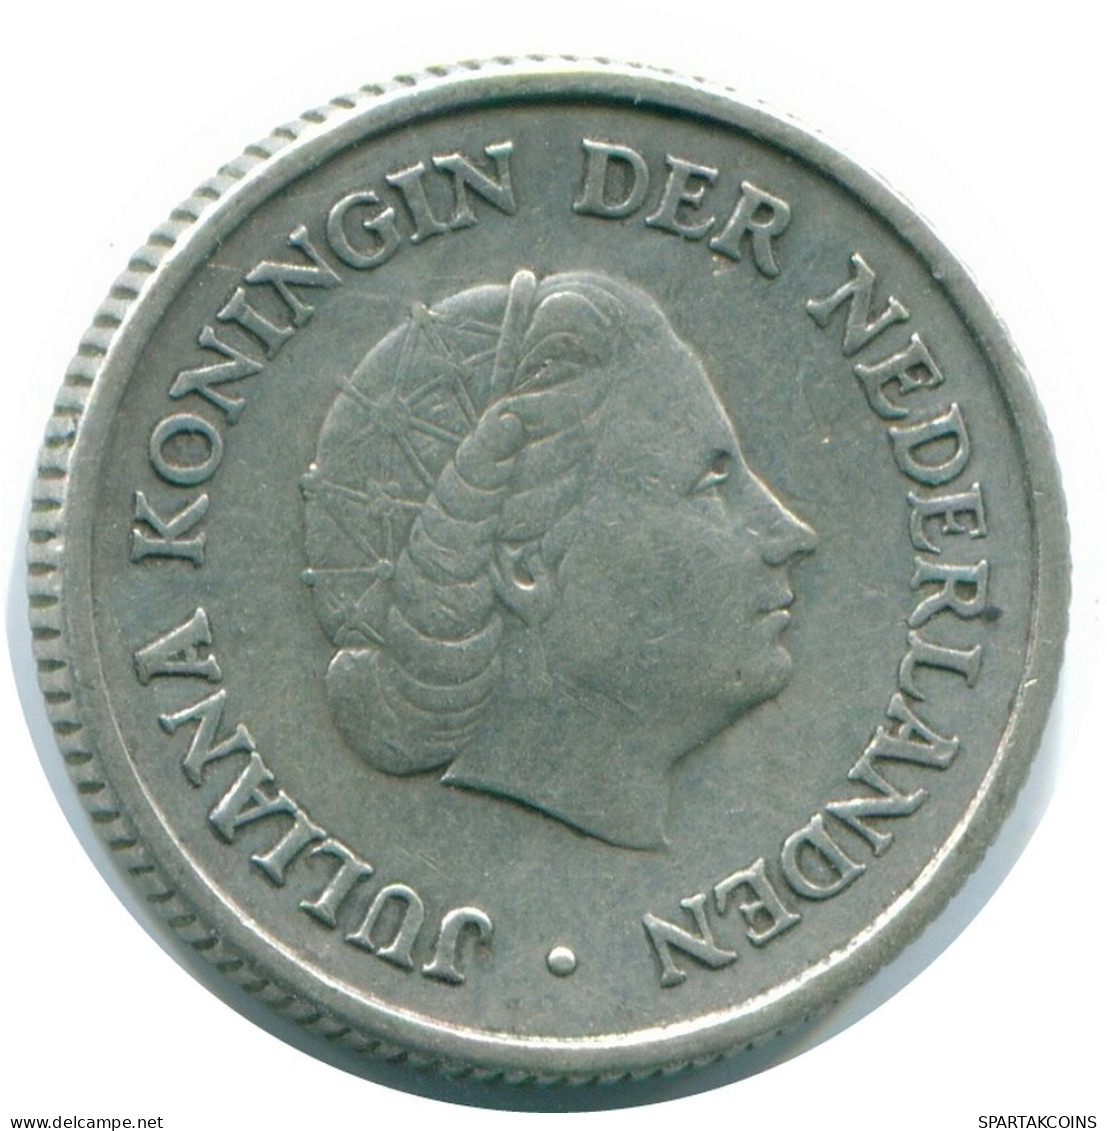 1/4 GULDEN 1956 NETHERLANDS ANTILLES SILVER Colonial Coin #NL10909.4.U.A - Niederländische Antillen